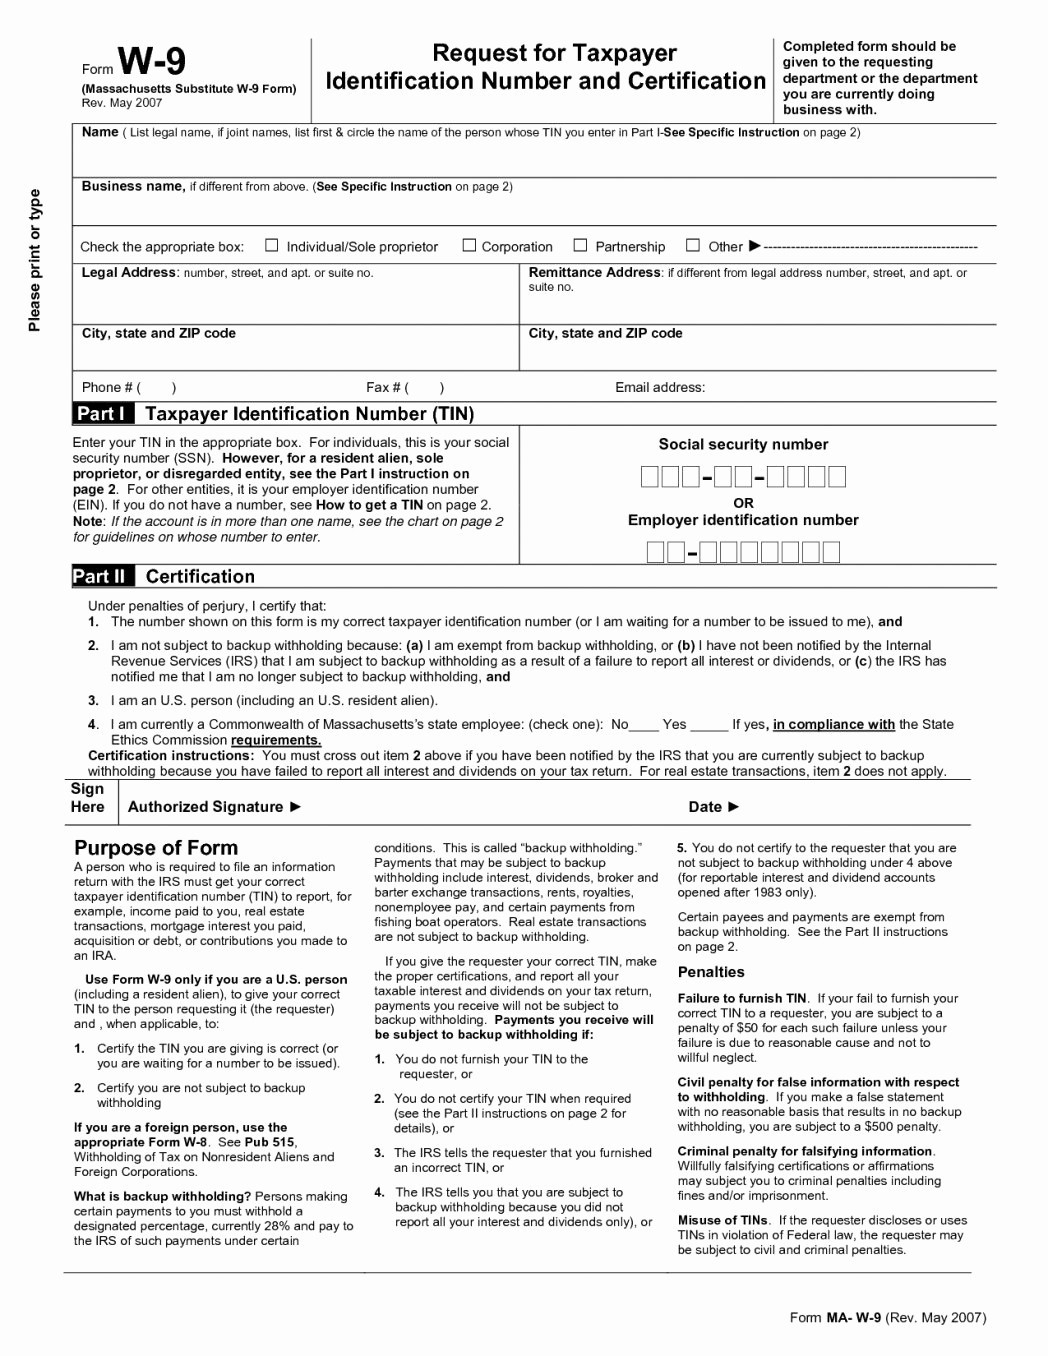 Blank W-9 Form 2020 Printable | Calendar Template Printable-Fillable 2021 W9 Form